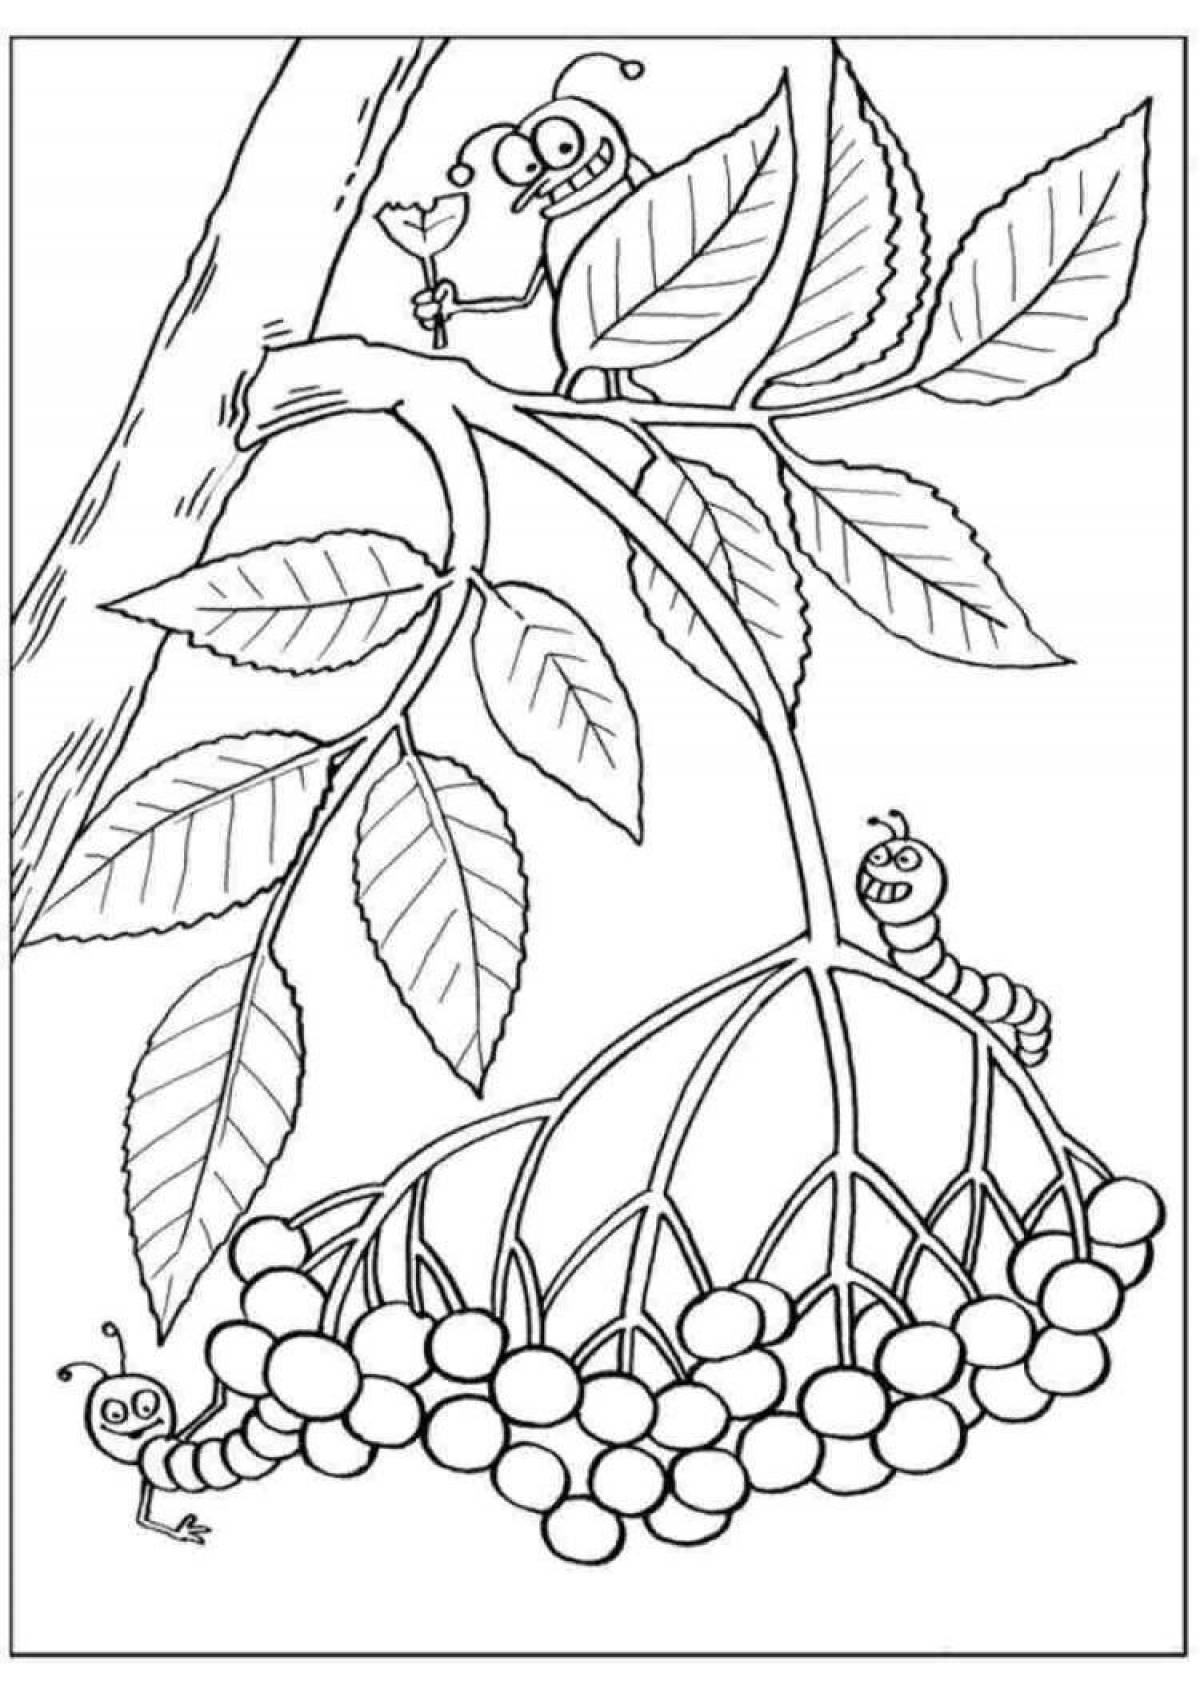 Coloring rowan berries